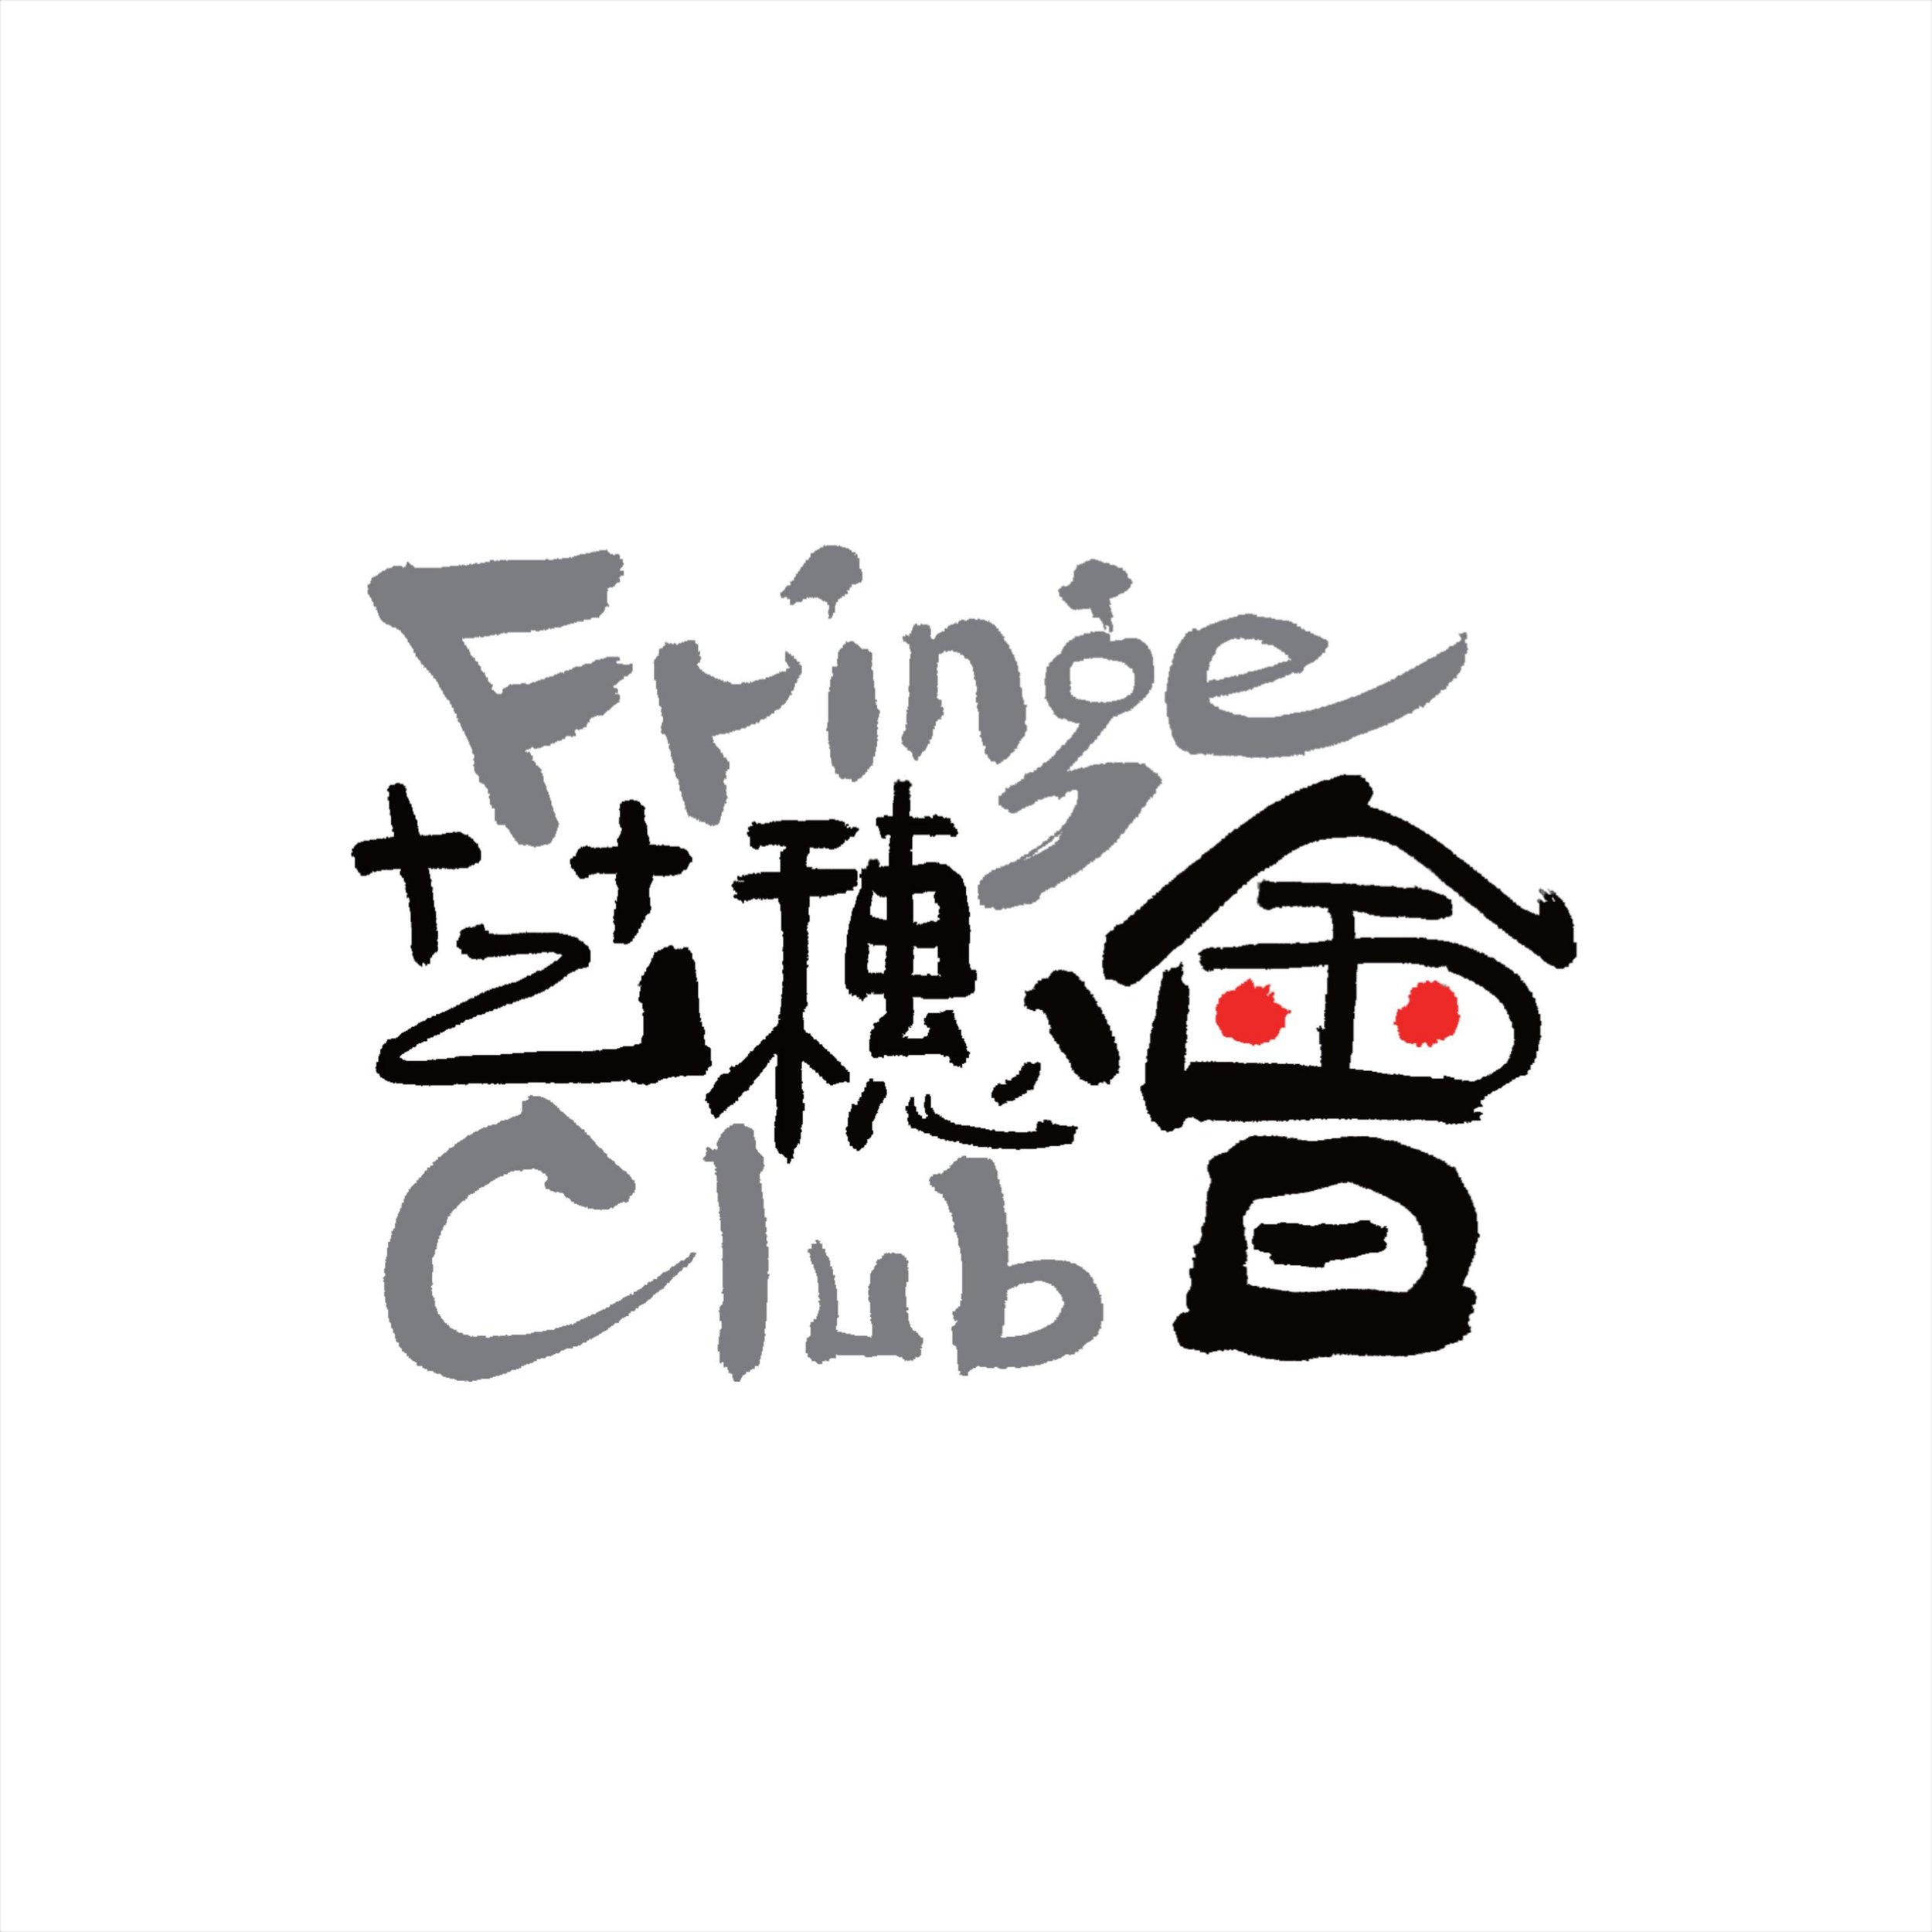 Hkfringe Club